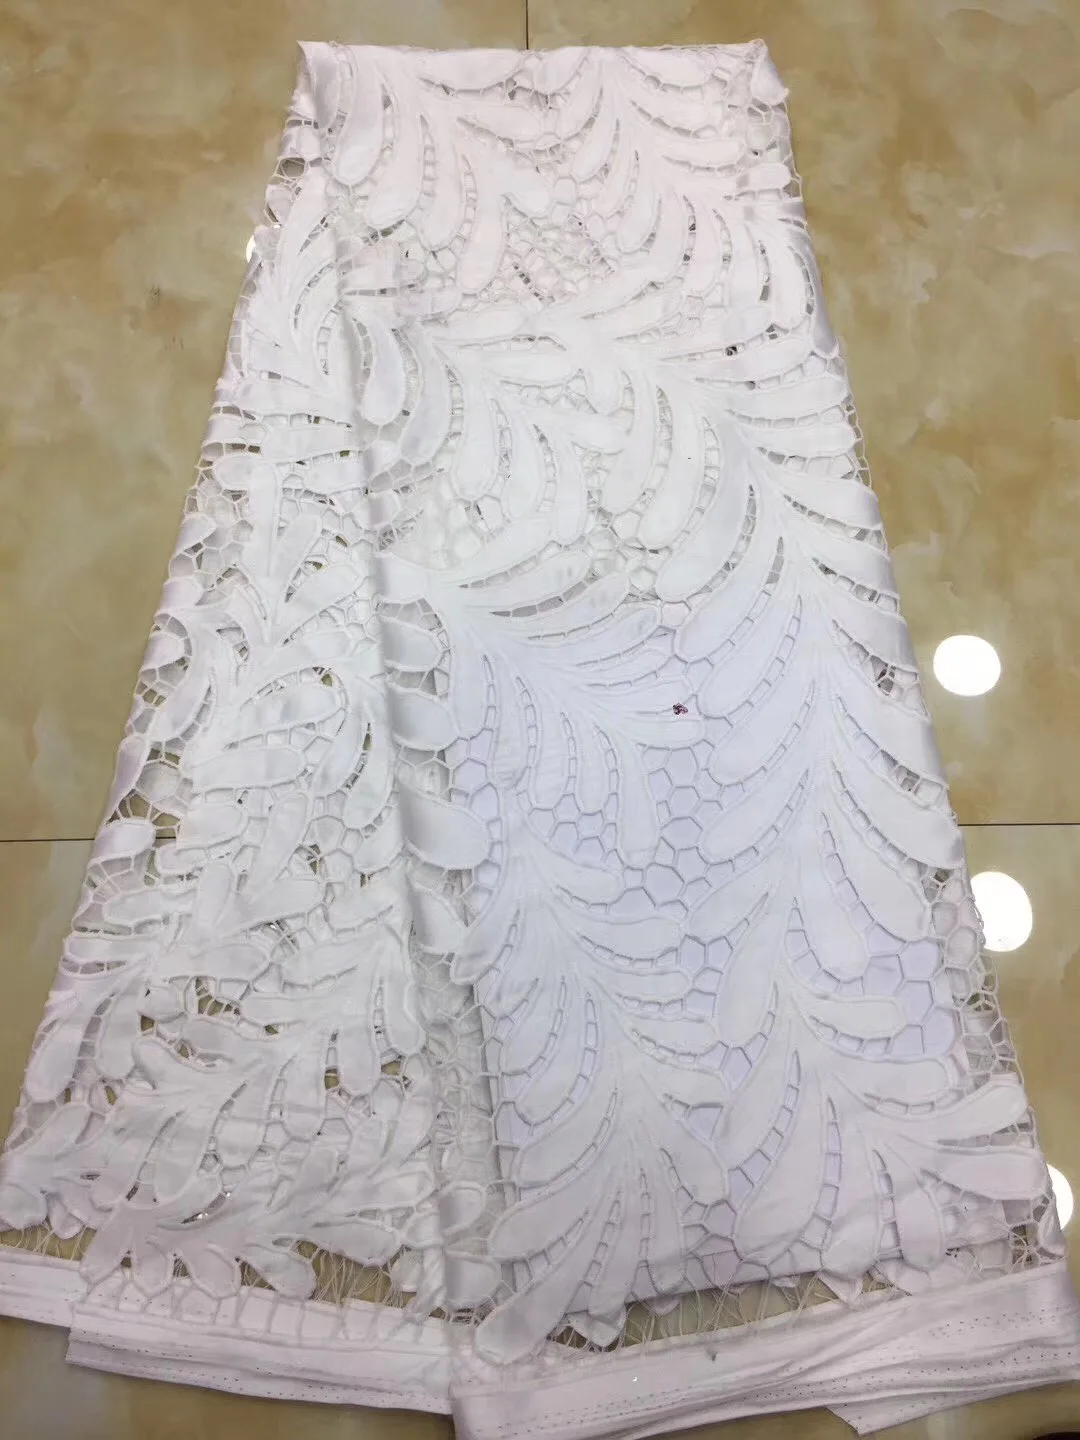 

2019 нигерийская французская кружевная ткань африканский тюль кружевная ткань высокого качества африканская кружевная ткань для свадебного...